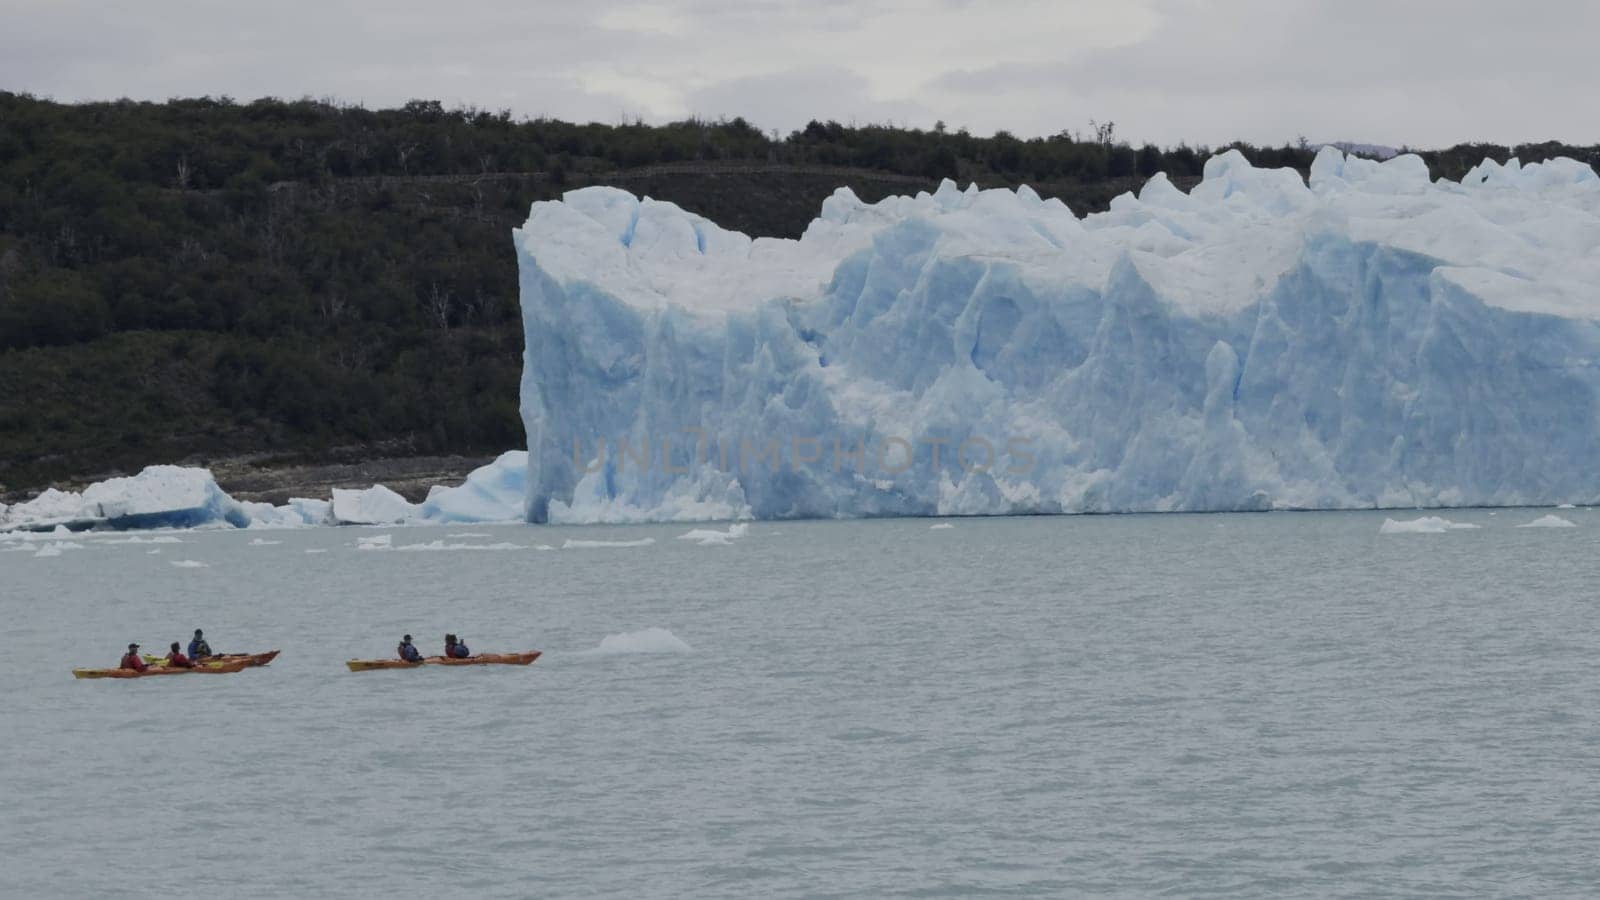 Kayakers approach Perito Moreno Glacier's ice walls in slow-mo.